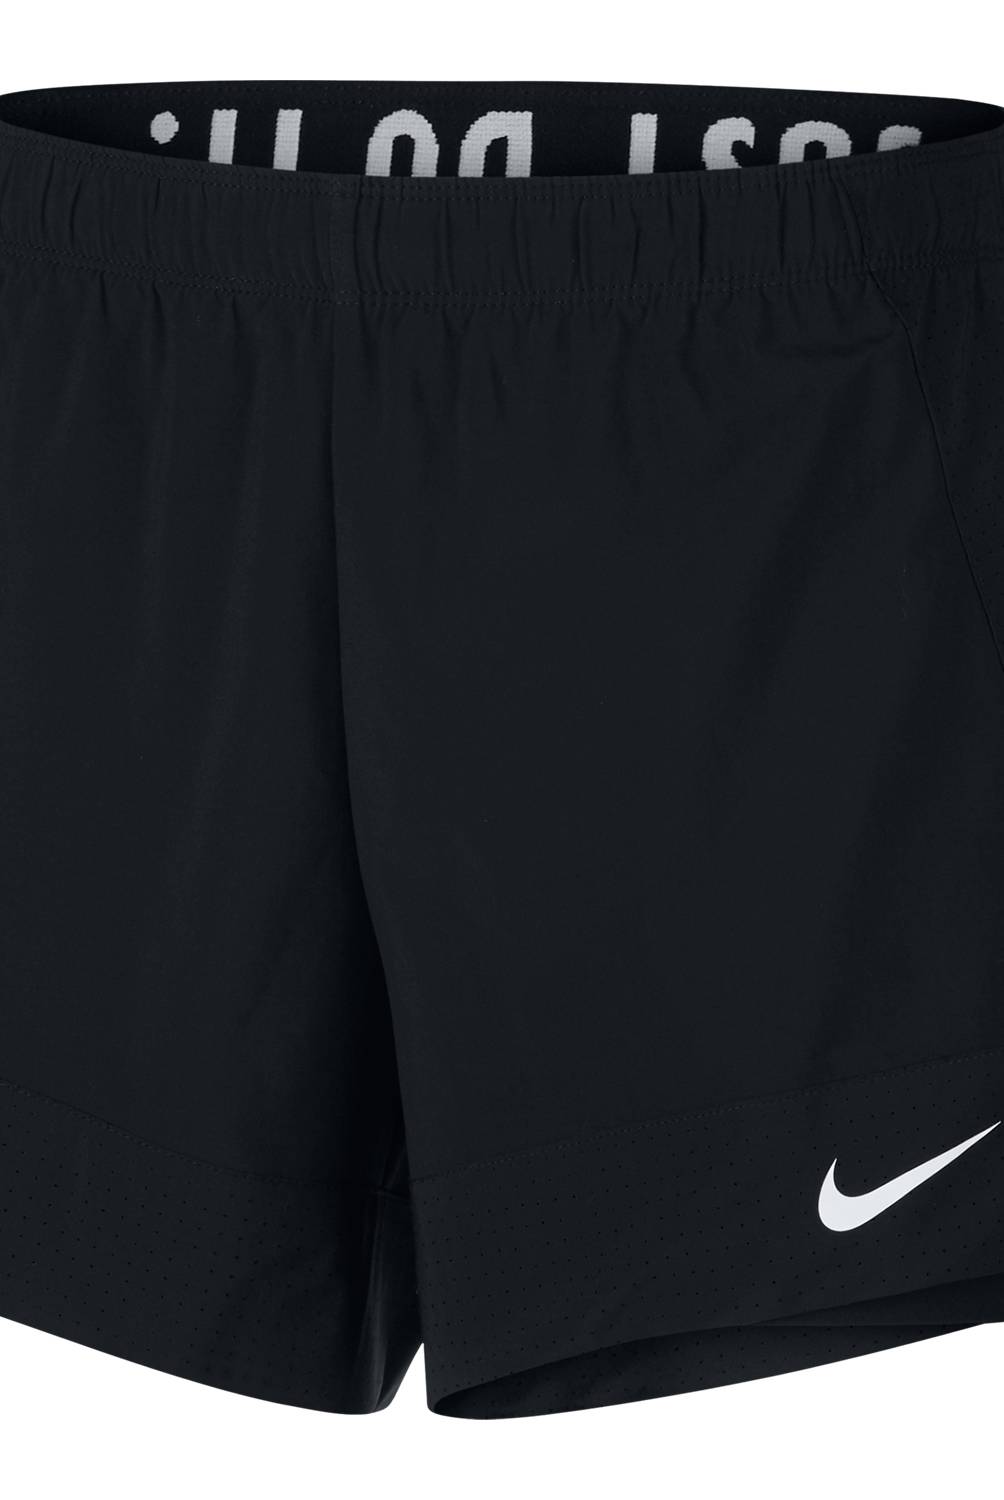 Nike - Short Flex